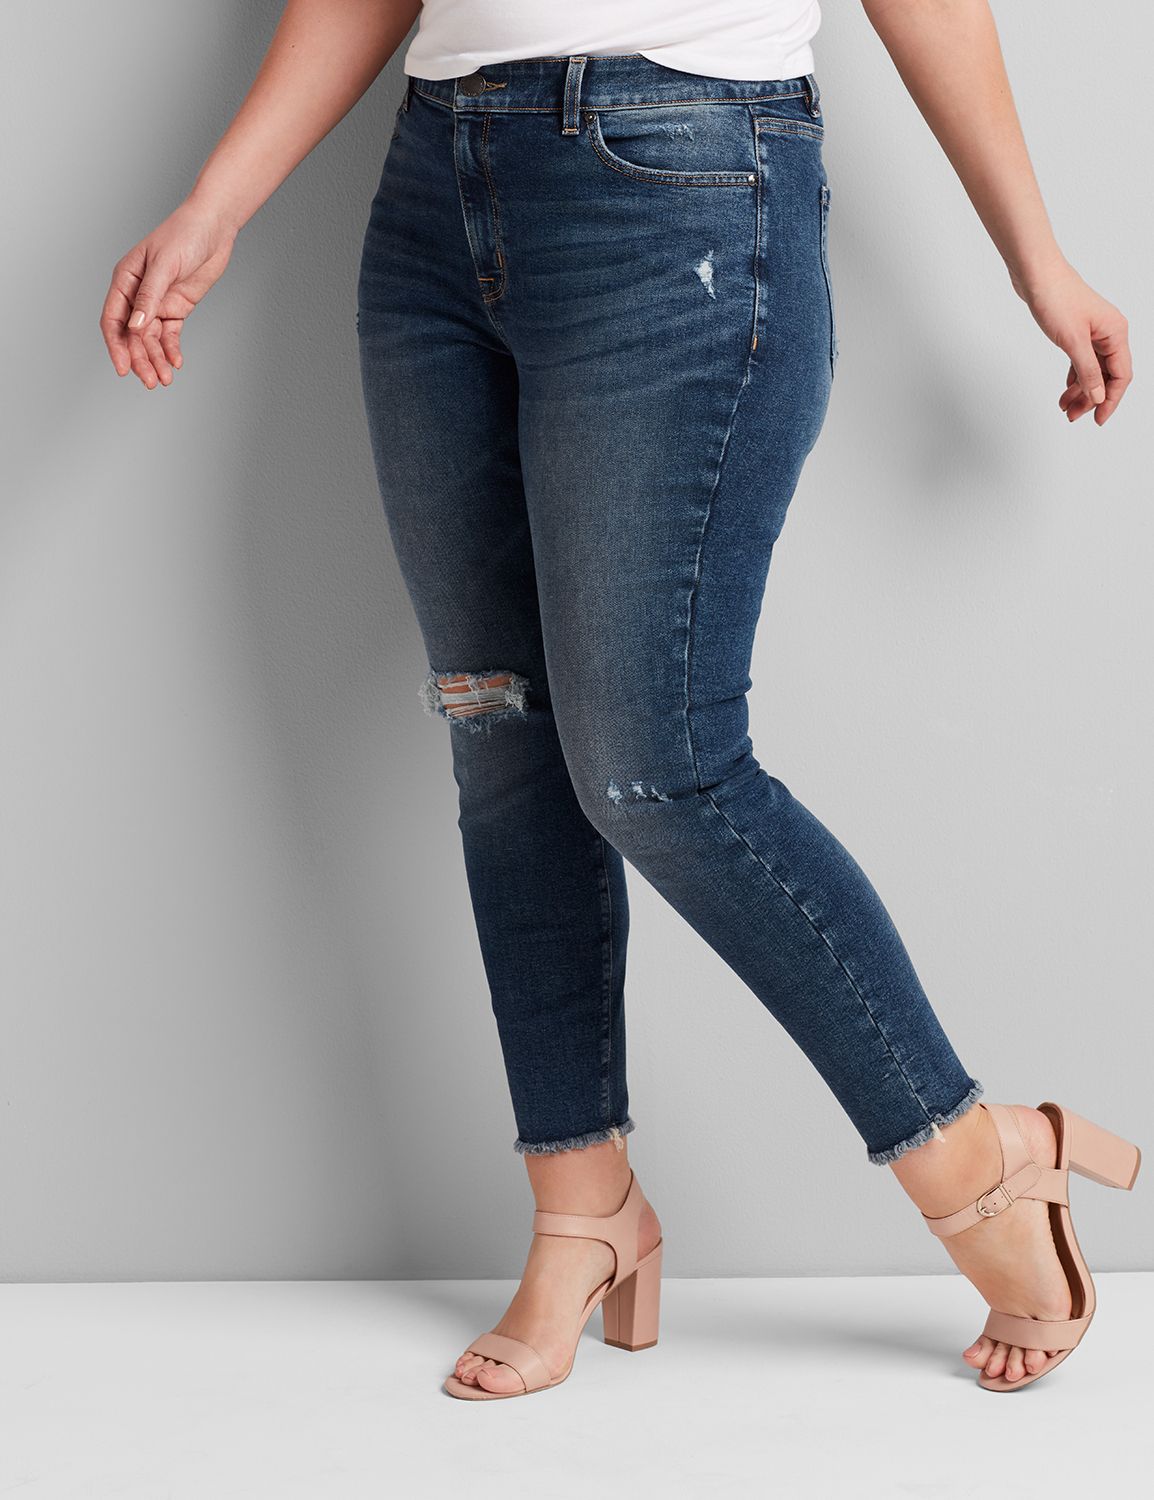 lane bryant women's jeans